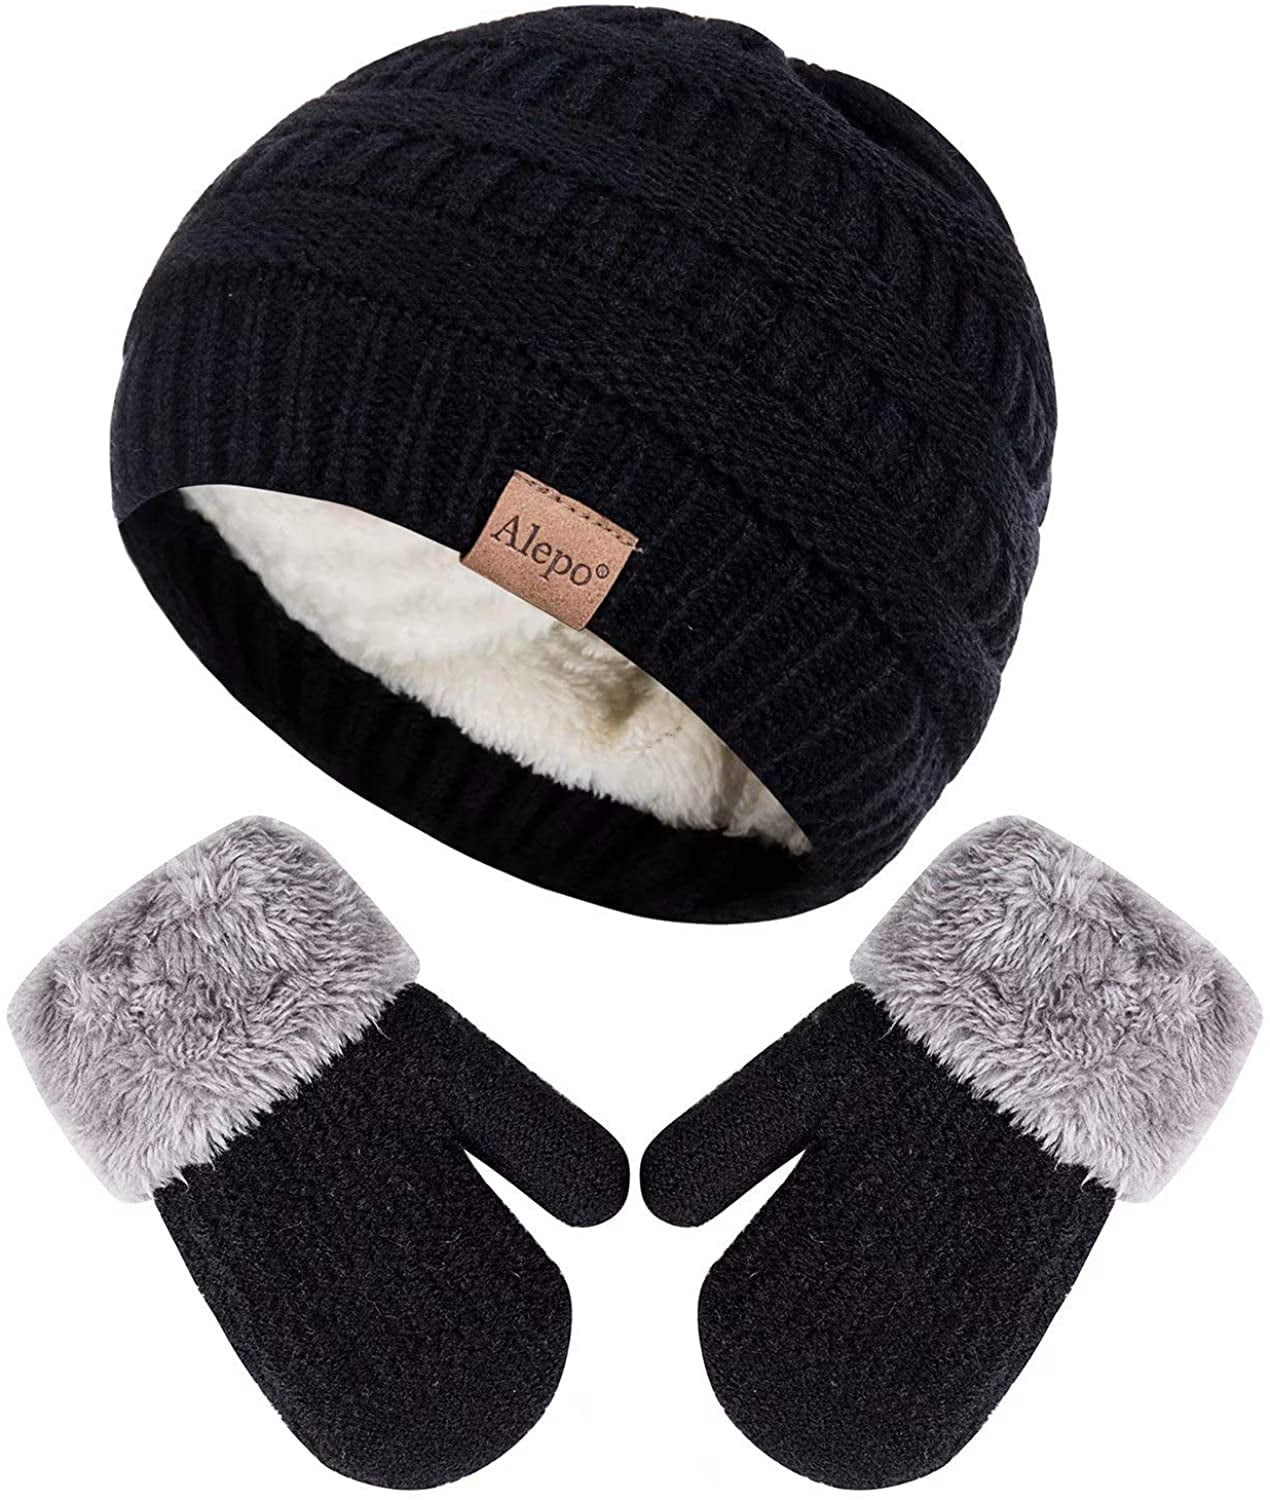 Baby Toddler Kids Winter Fleece Lined Knit Beanie Hat and Warm Mitten Gloves Set 